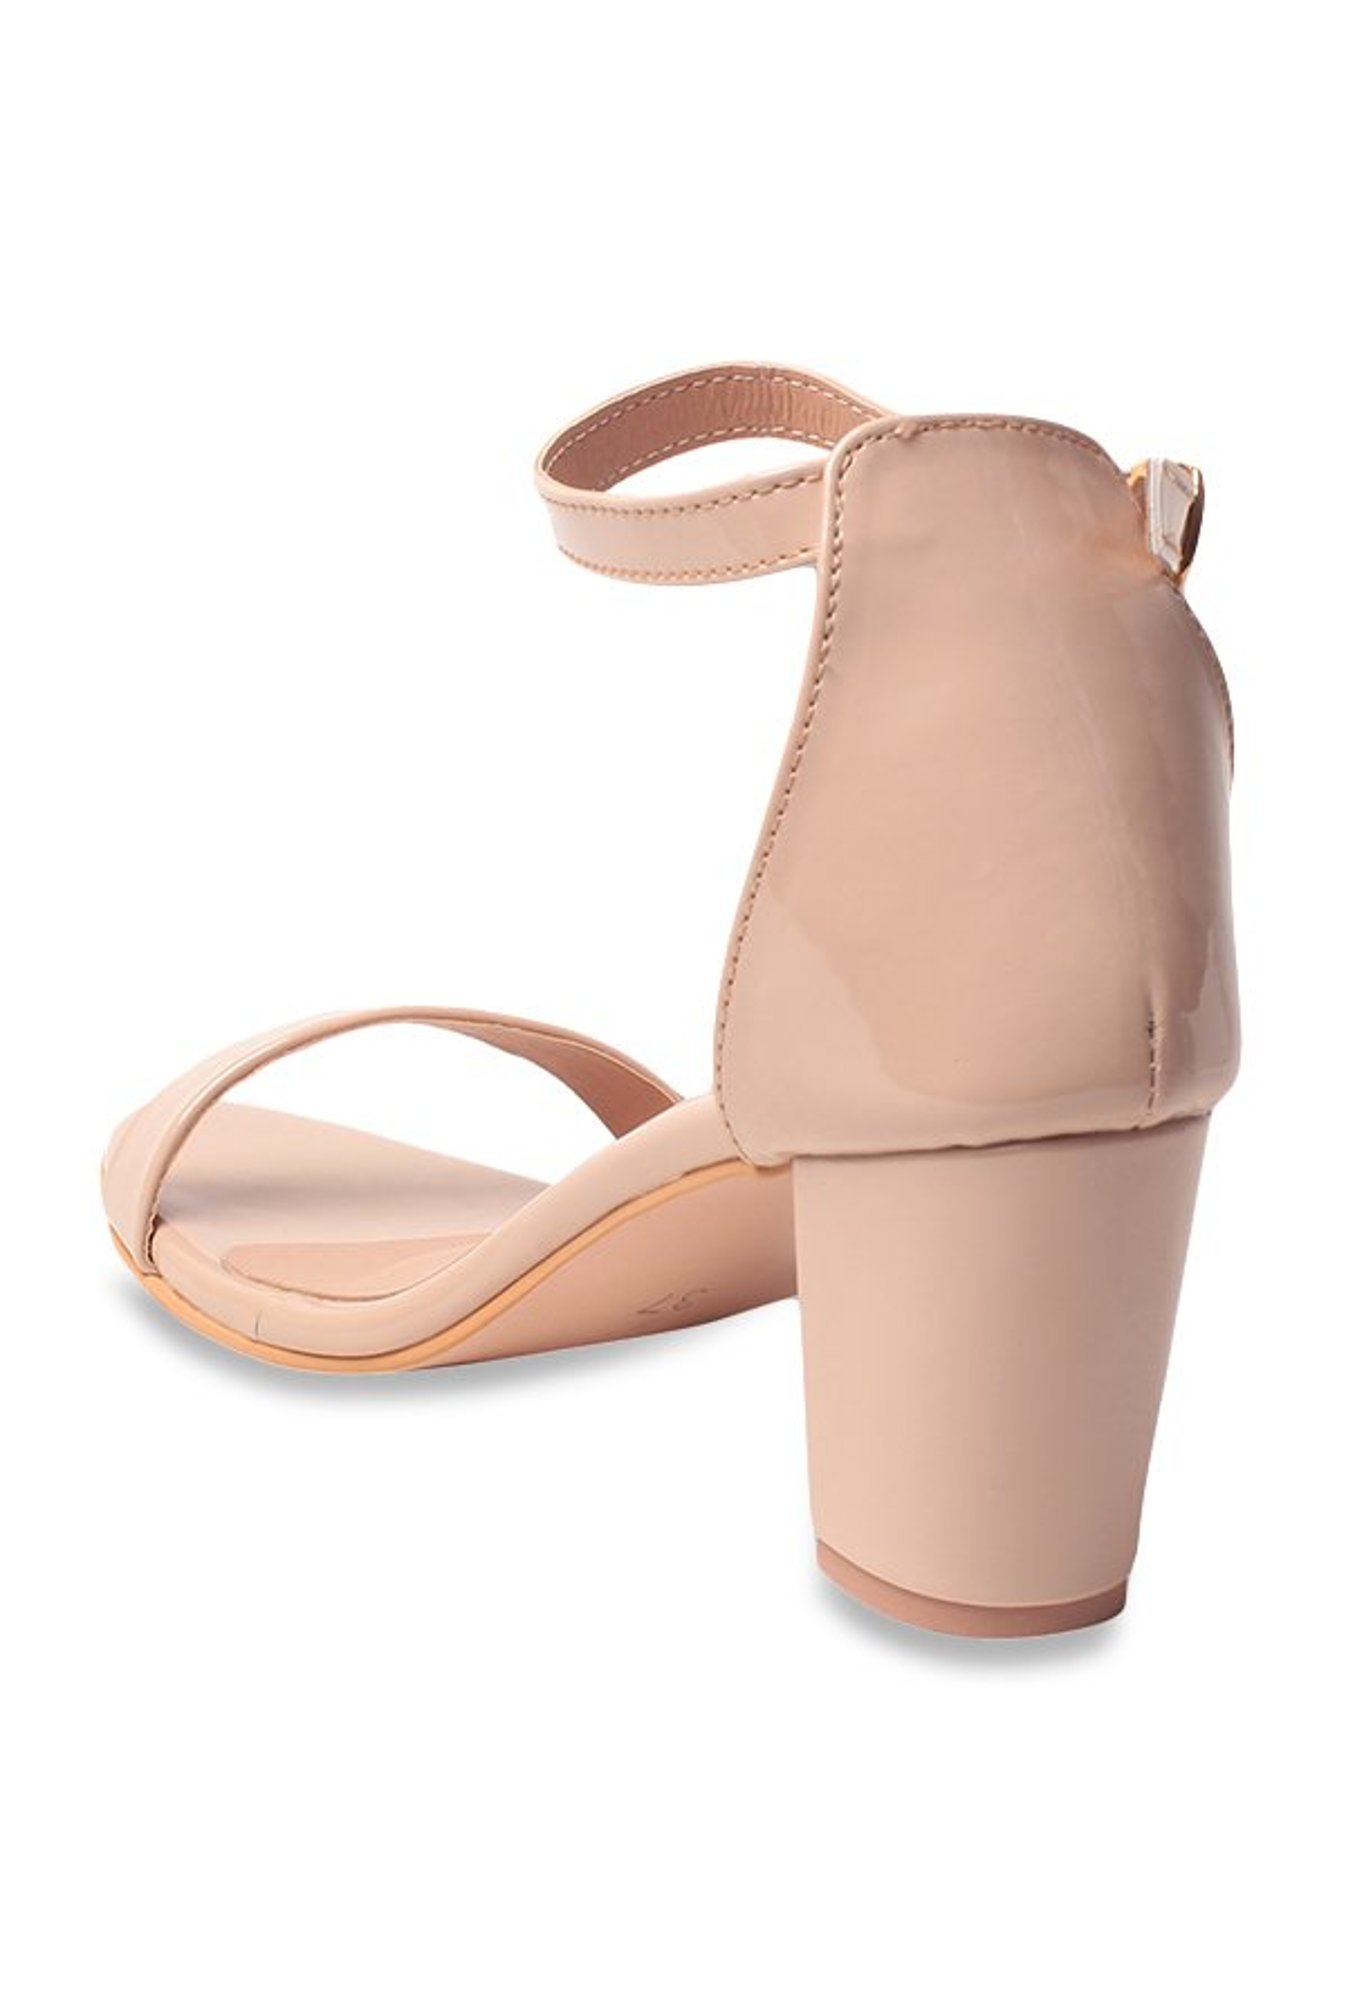 GNIST Double Strap Chunky Beige Heels : Amazon.in: Shoes & Handbags